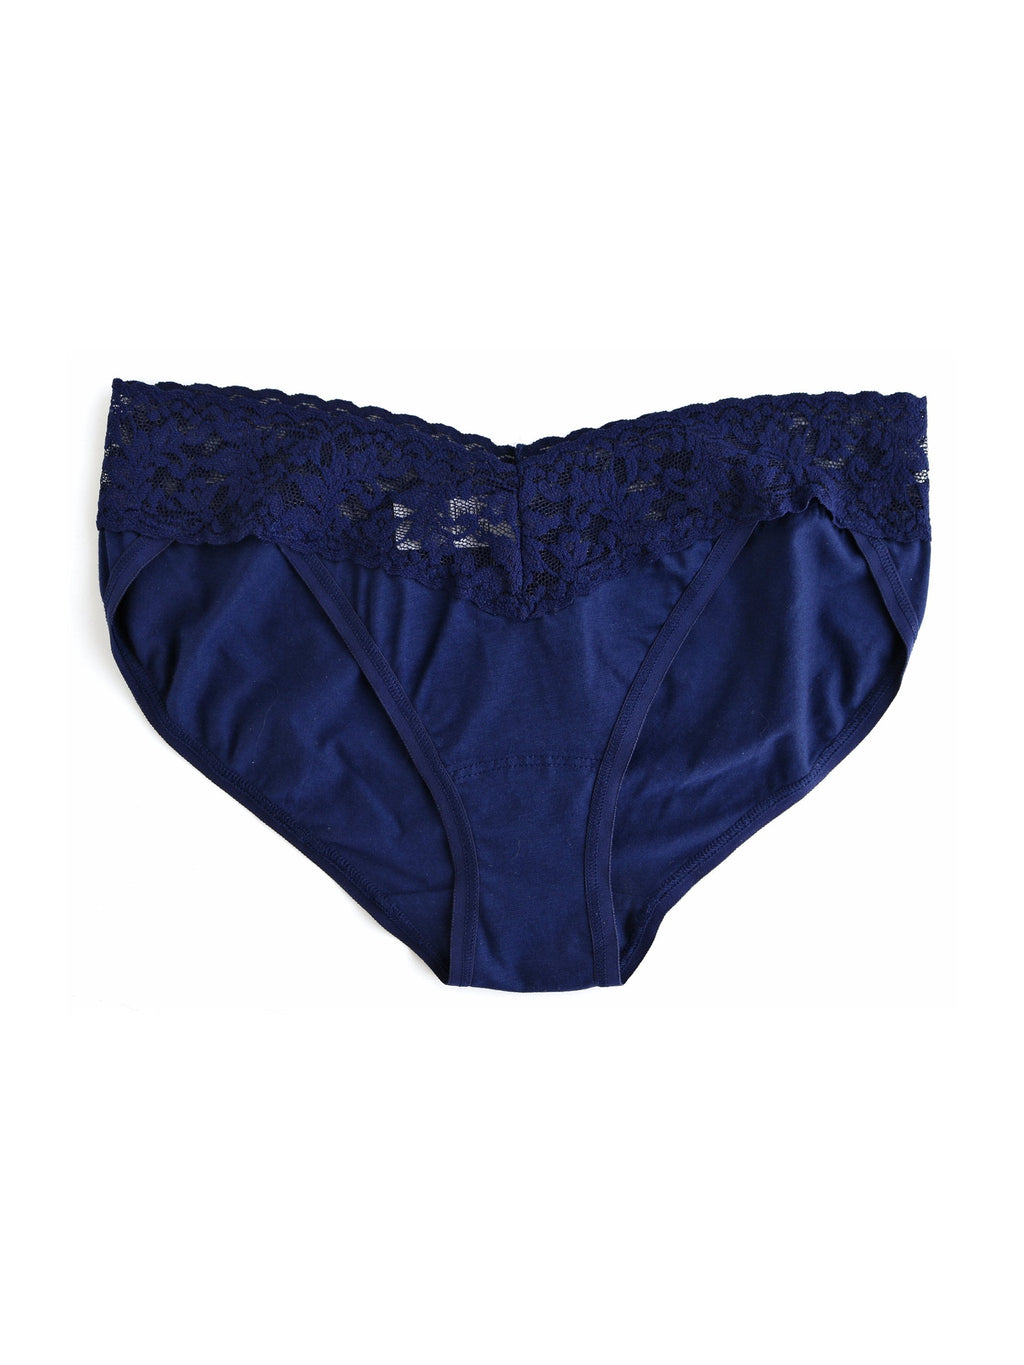 Women's Lace Trim Cotton Bikini Underwear - Auden™ Blue XL